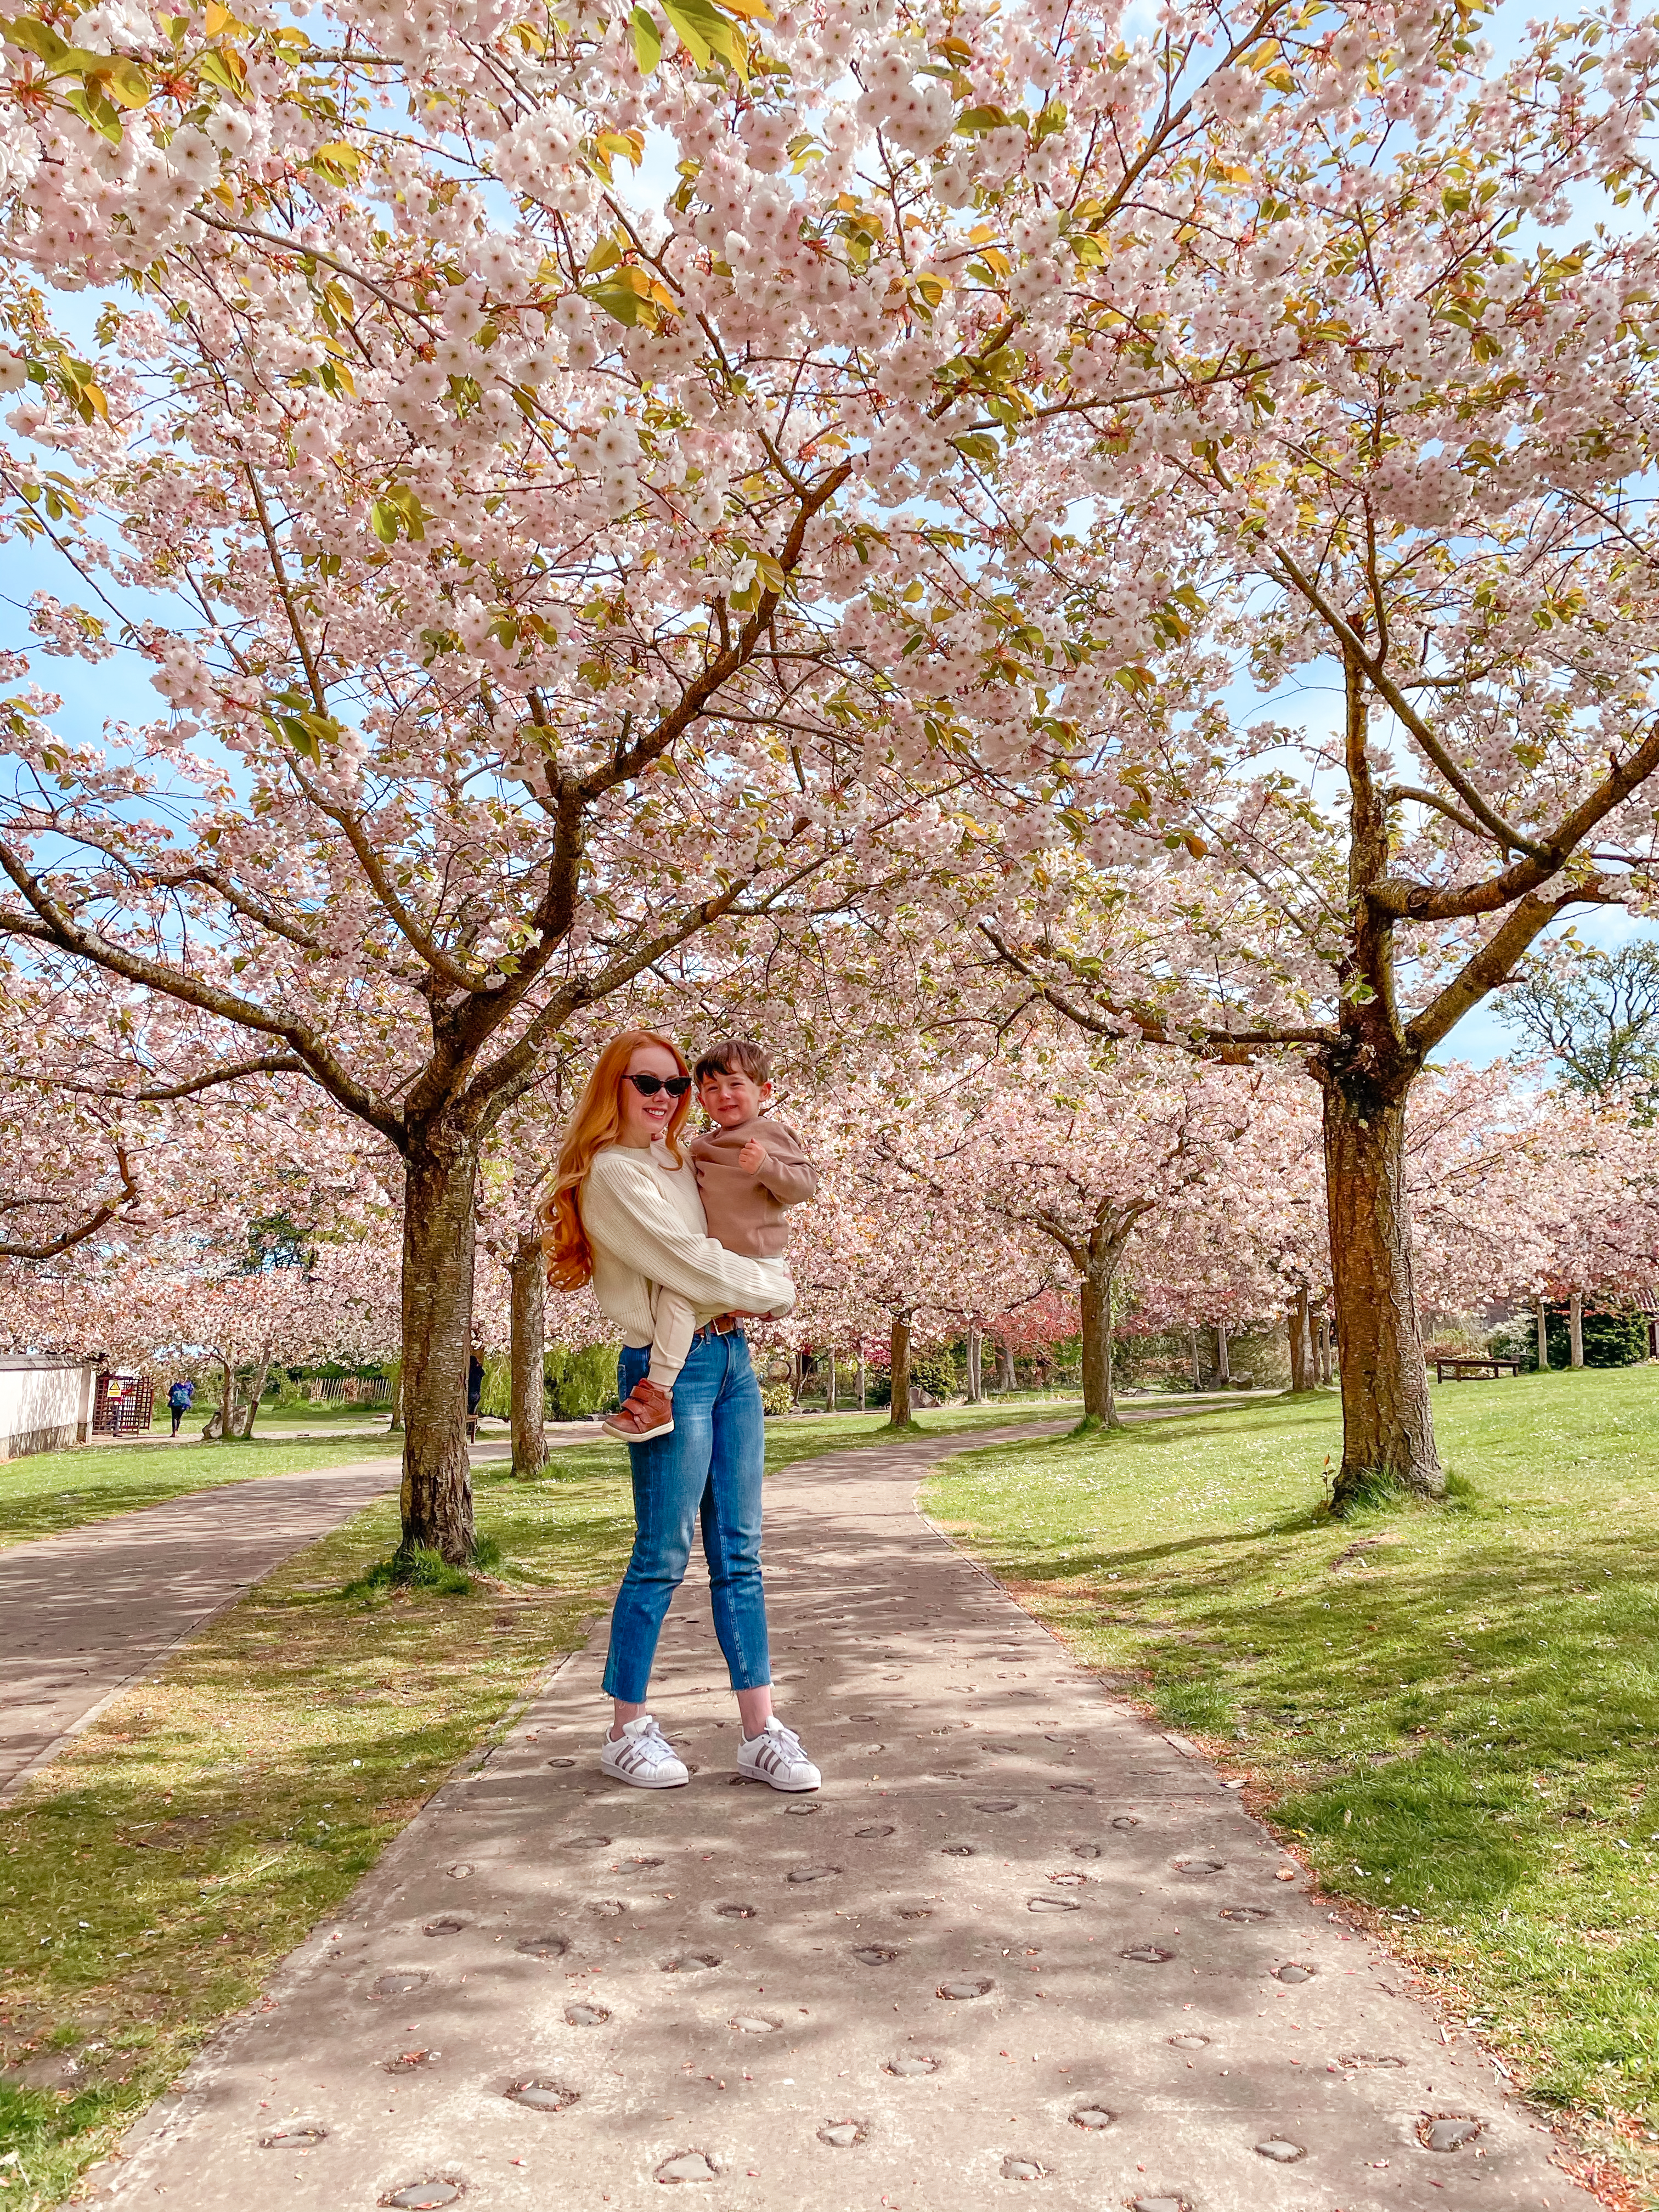 cherry blossom trees in Lauriston Castle gardens, Edinburgh